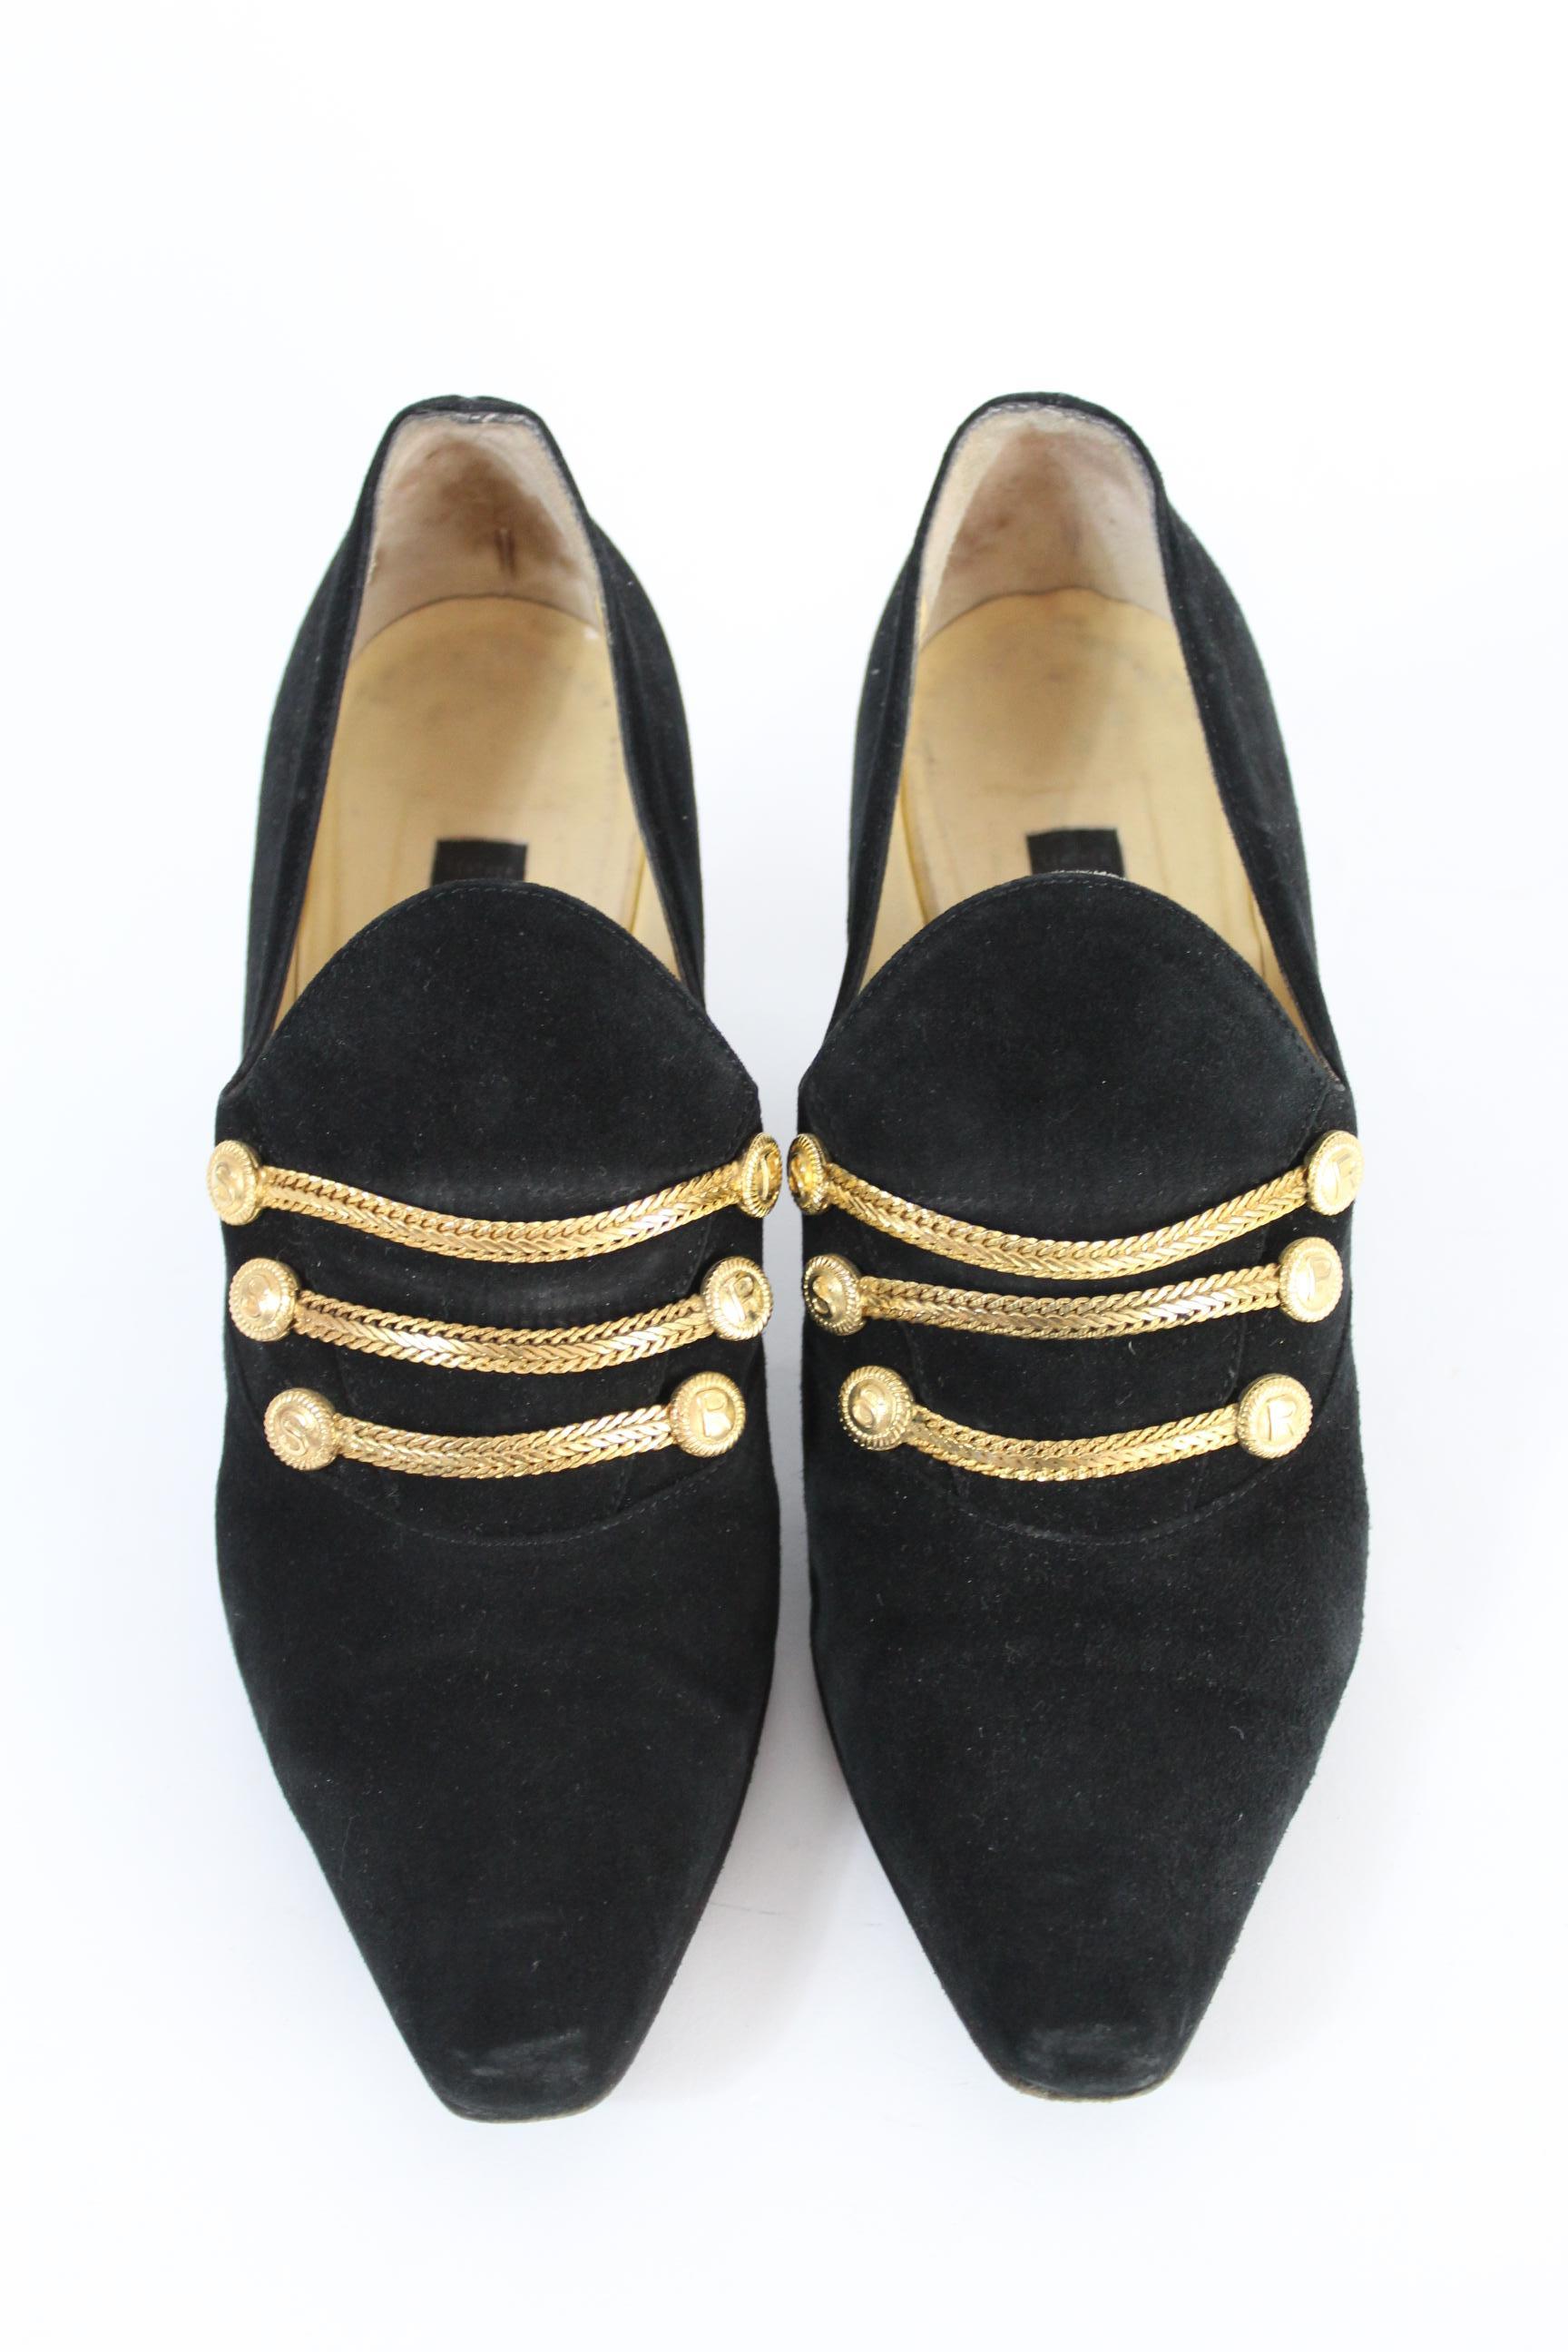 Sergio Rossi Black Suede Pumps Heel Platform Shoes 1980s In Good Condition For Sale In Brindisi, Bt